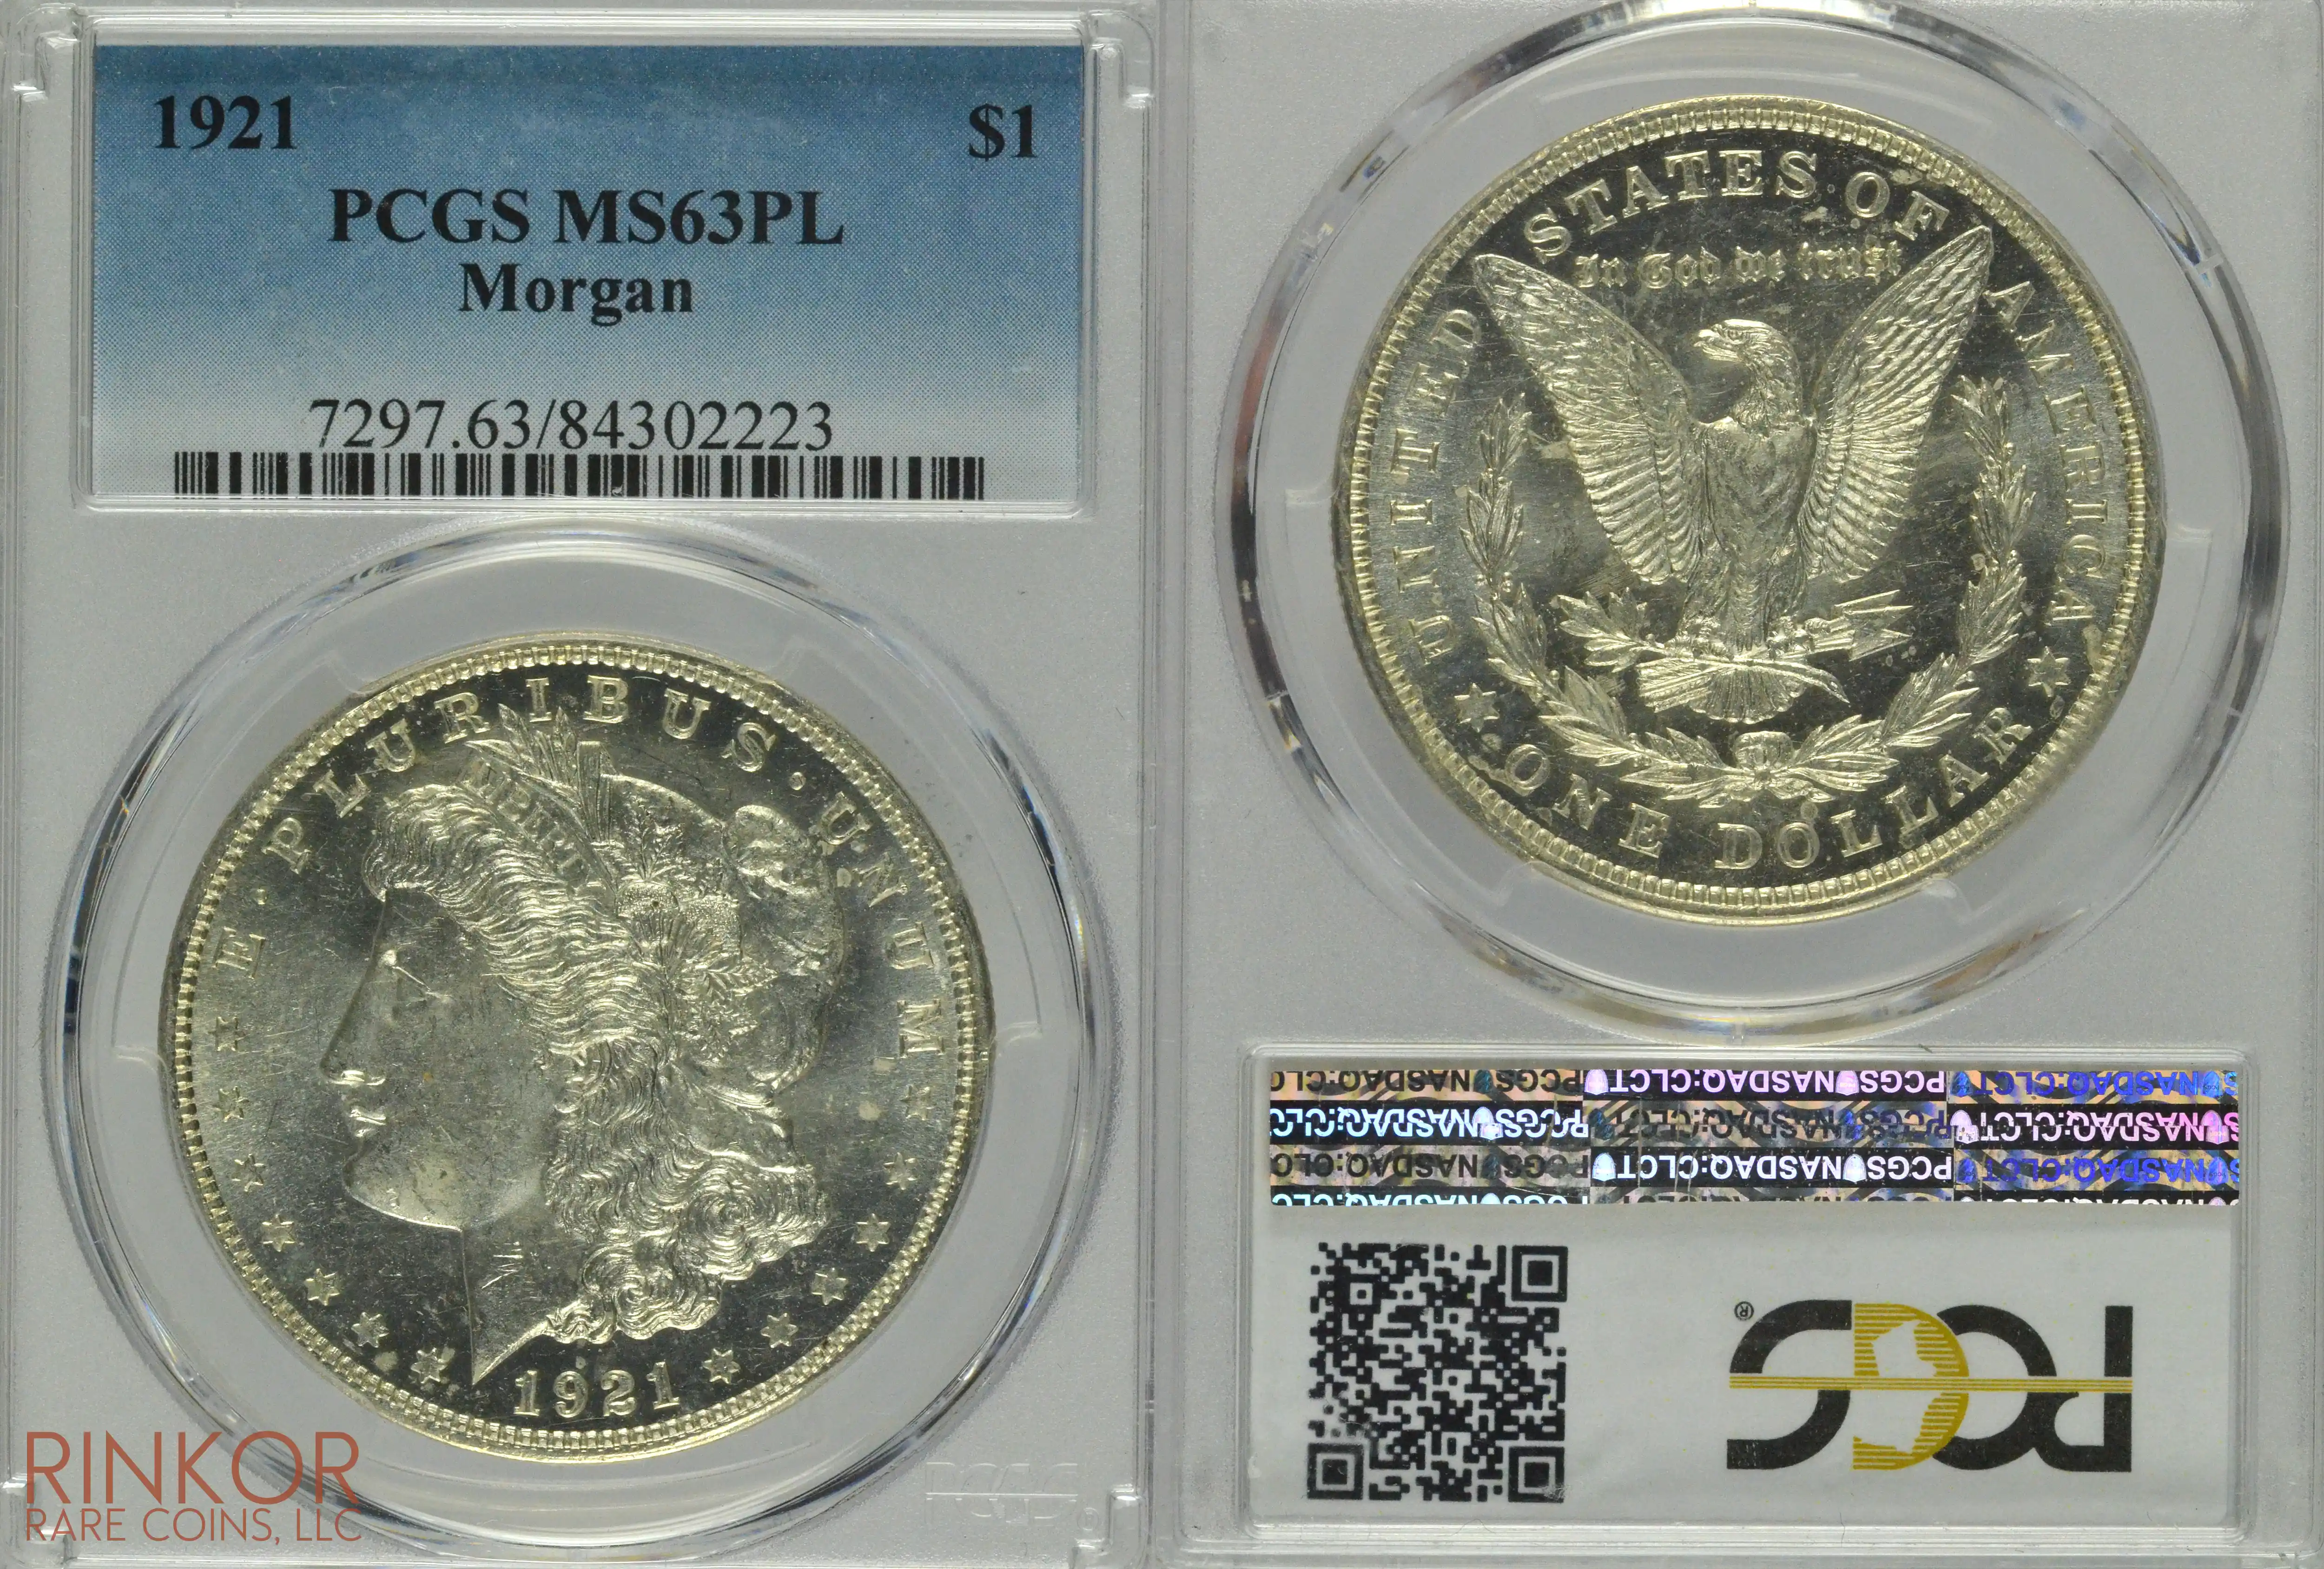 1921 Morgan $1 PCGS MS 63 PL